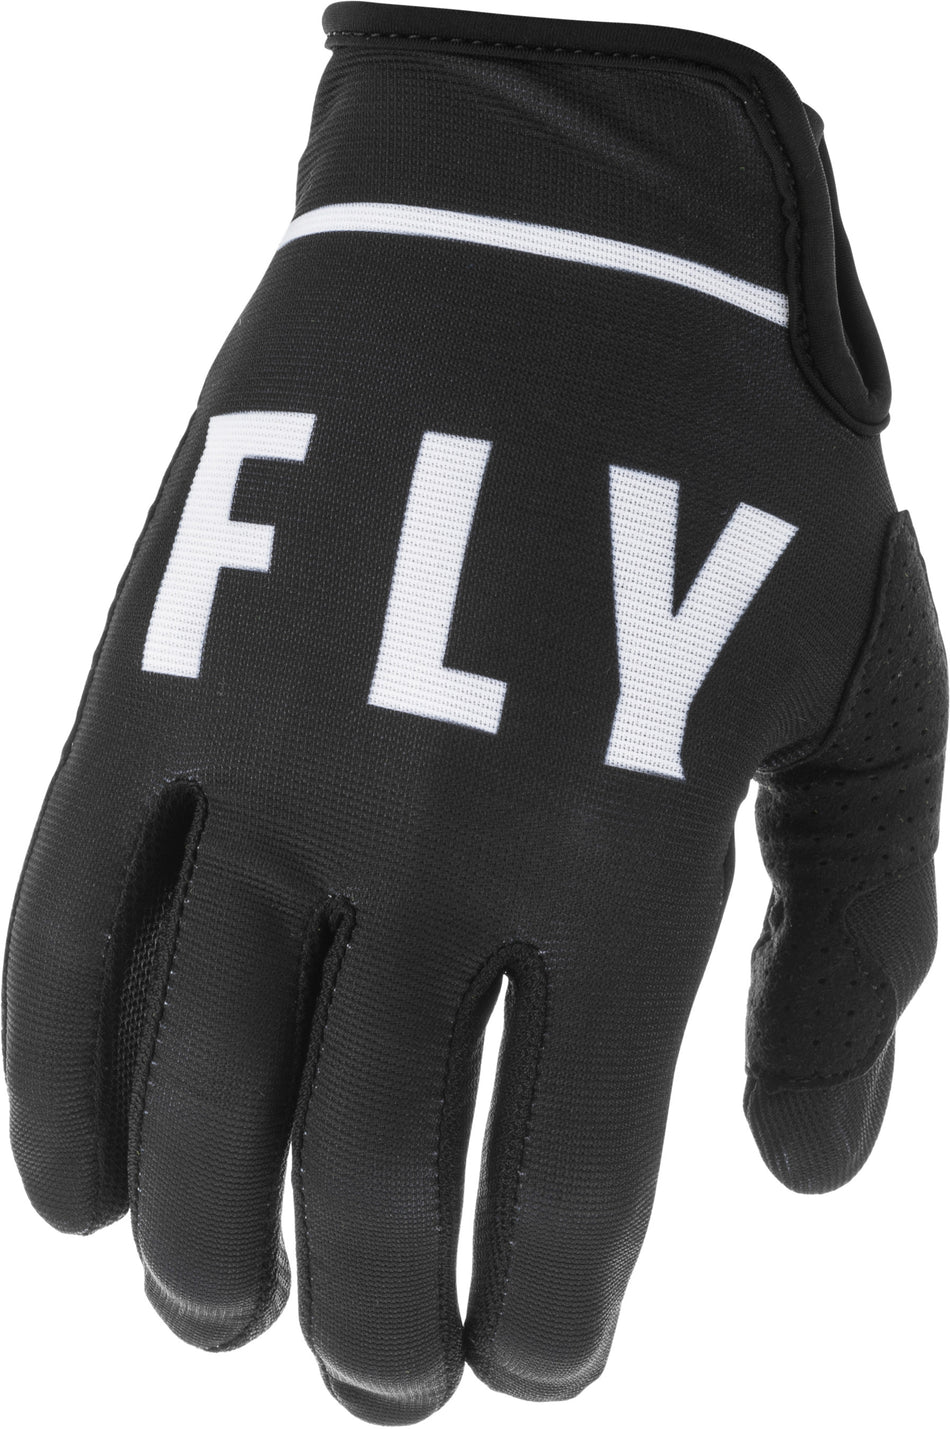 FLY RACING Lite Gloves Black/White Sz 09 373-71109